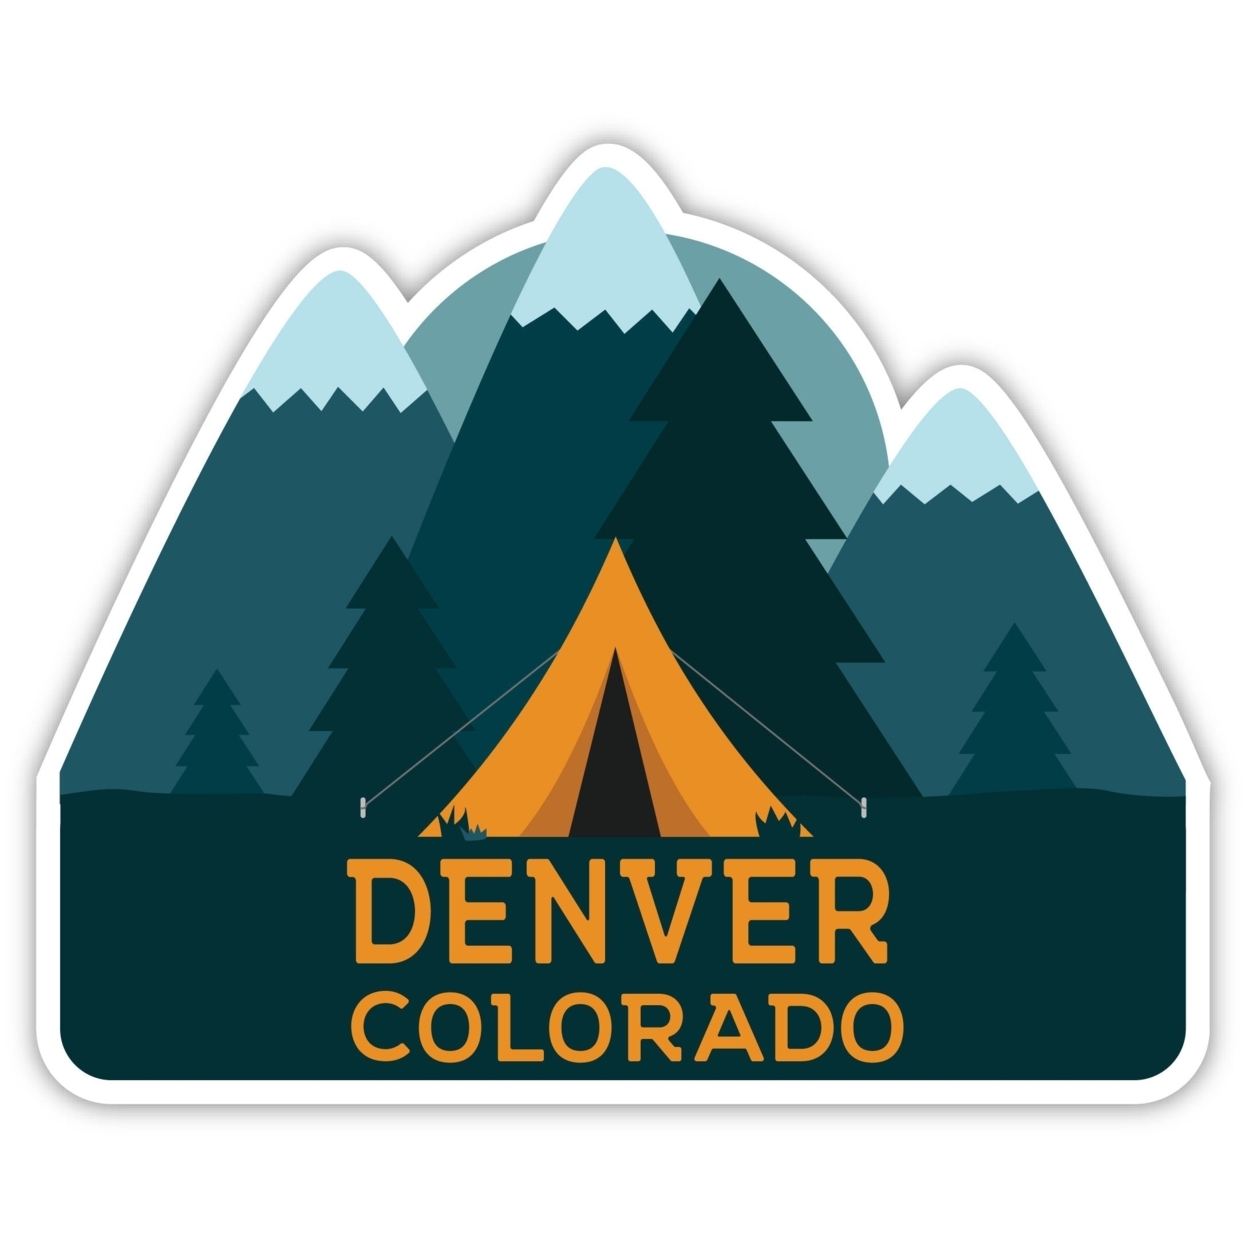 Denver Colorado Souvenir Decorative Stickers (Choose Theme And Size) - 4-Pack, 12-Inch, Tent